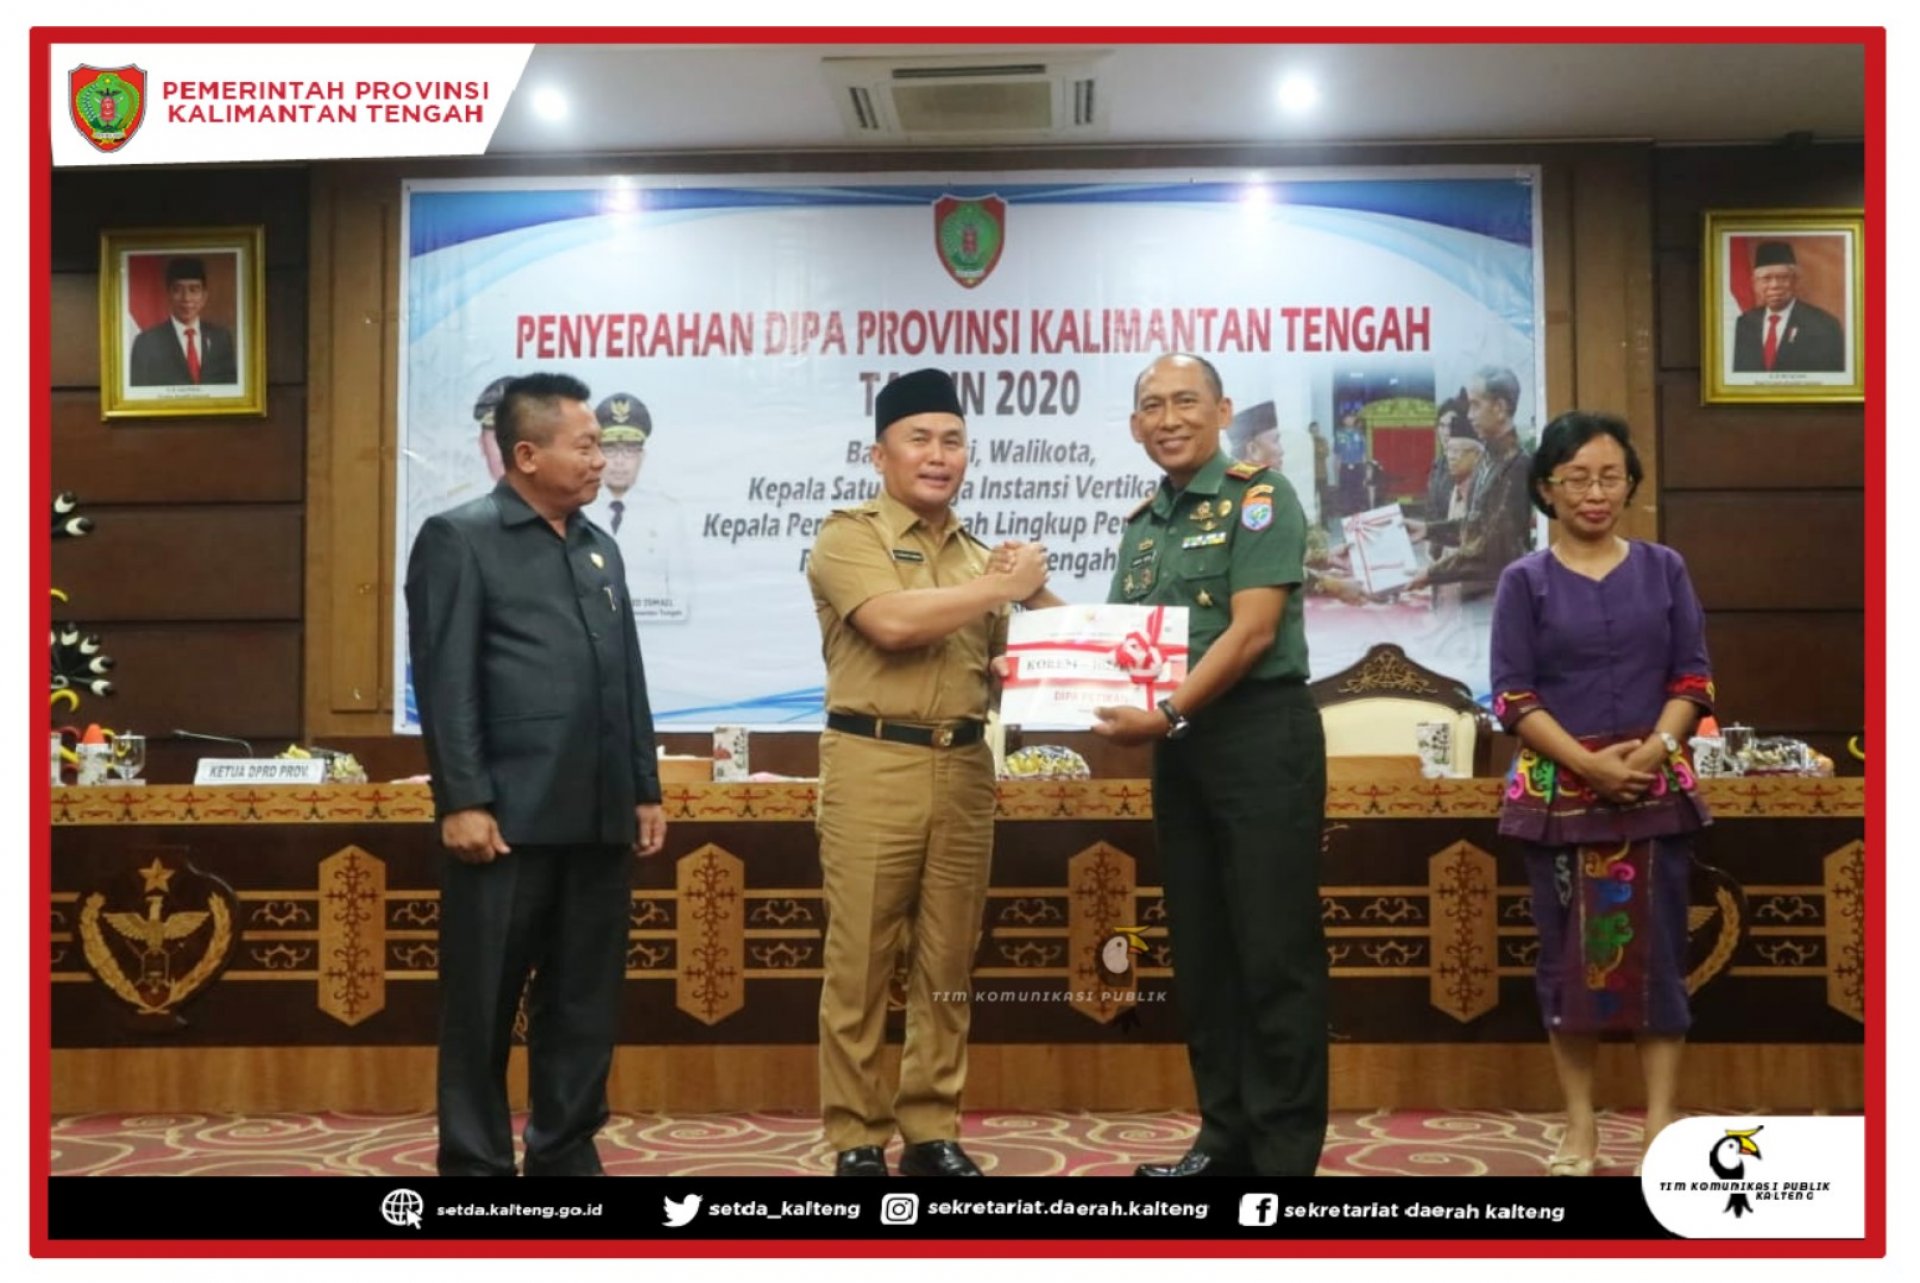 Penyerahan Daftar Isian Pelaksanaan Anggaran (DIPA) Provinsi Kalimantan Tengah Tahun 2020